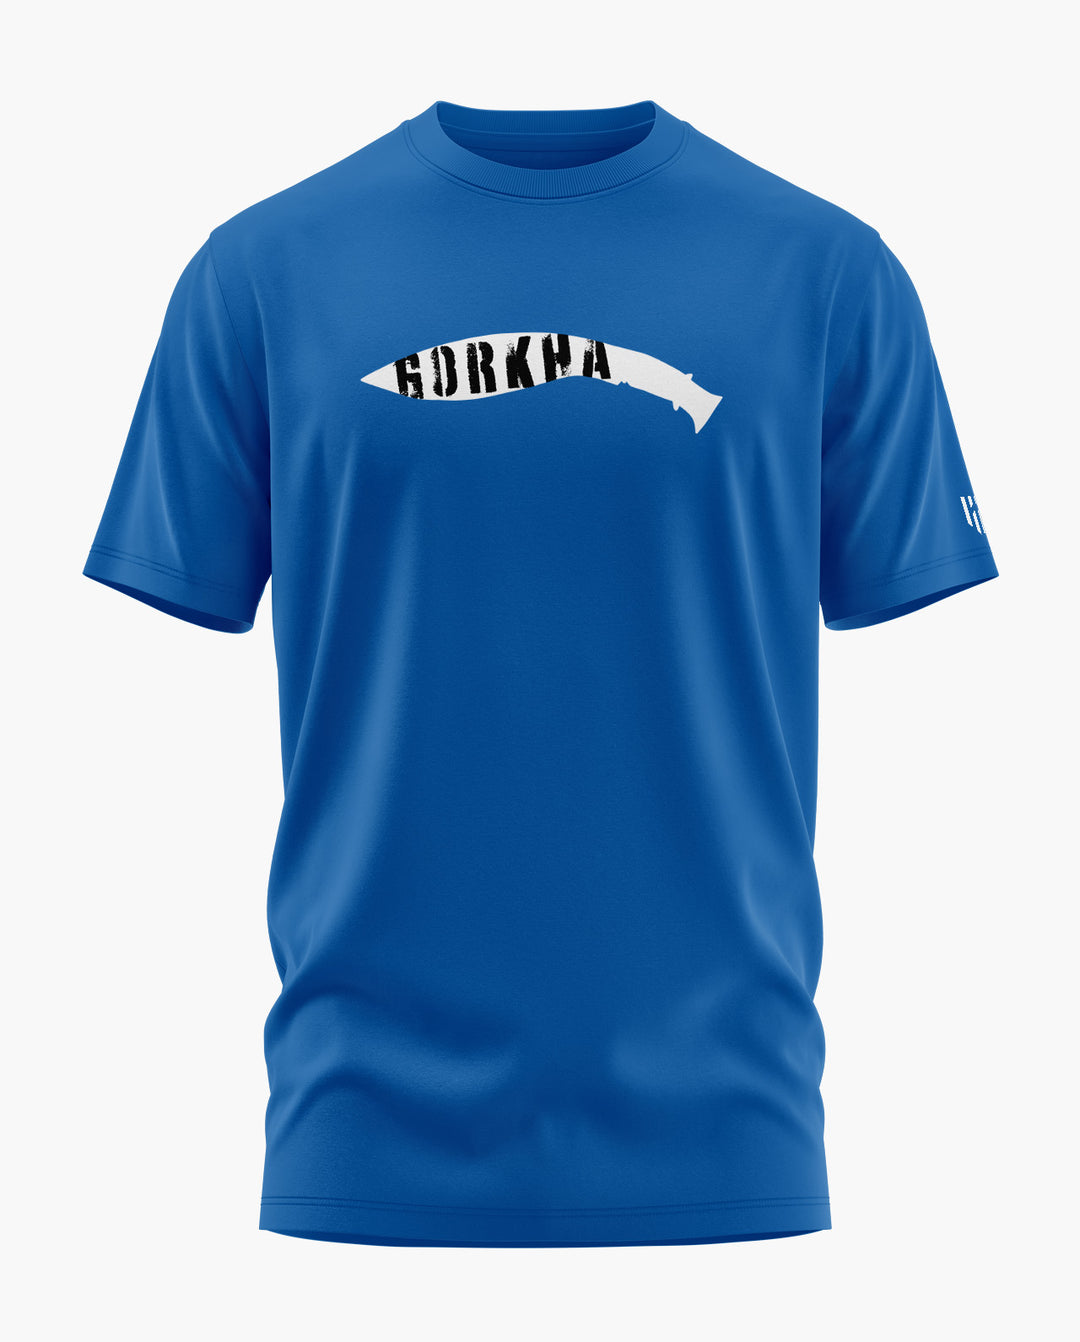 GORKHA EDGE T-Shirt